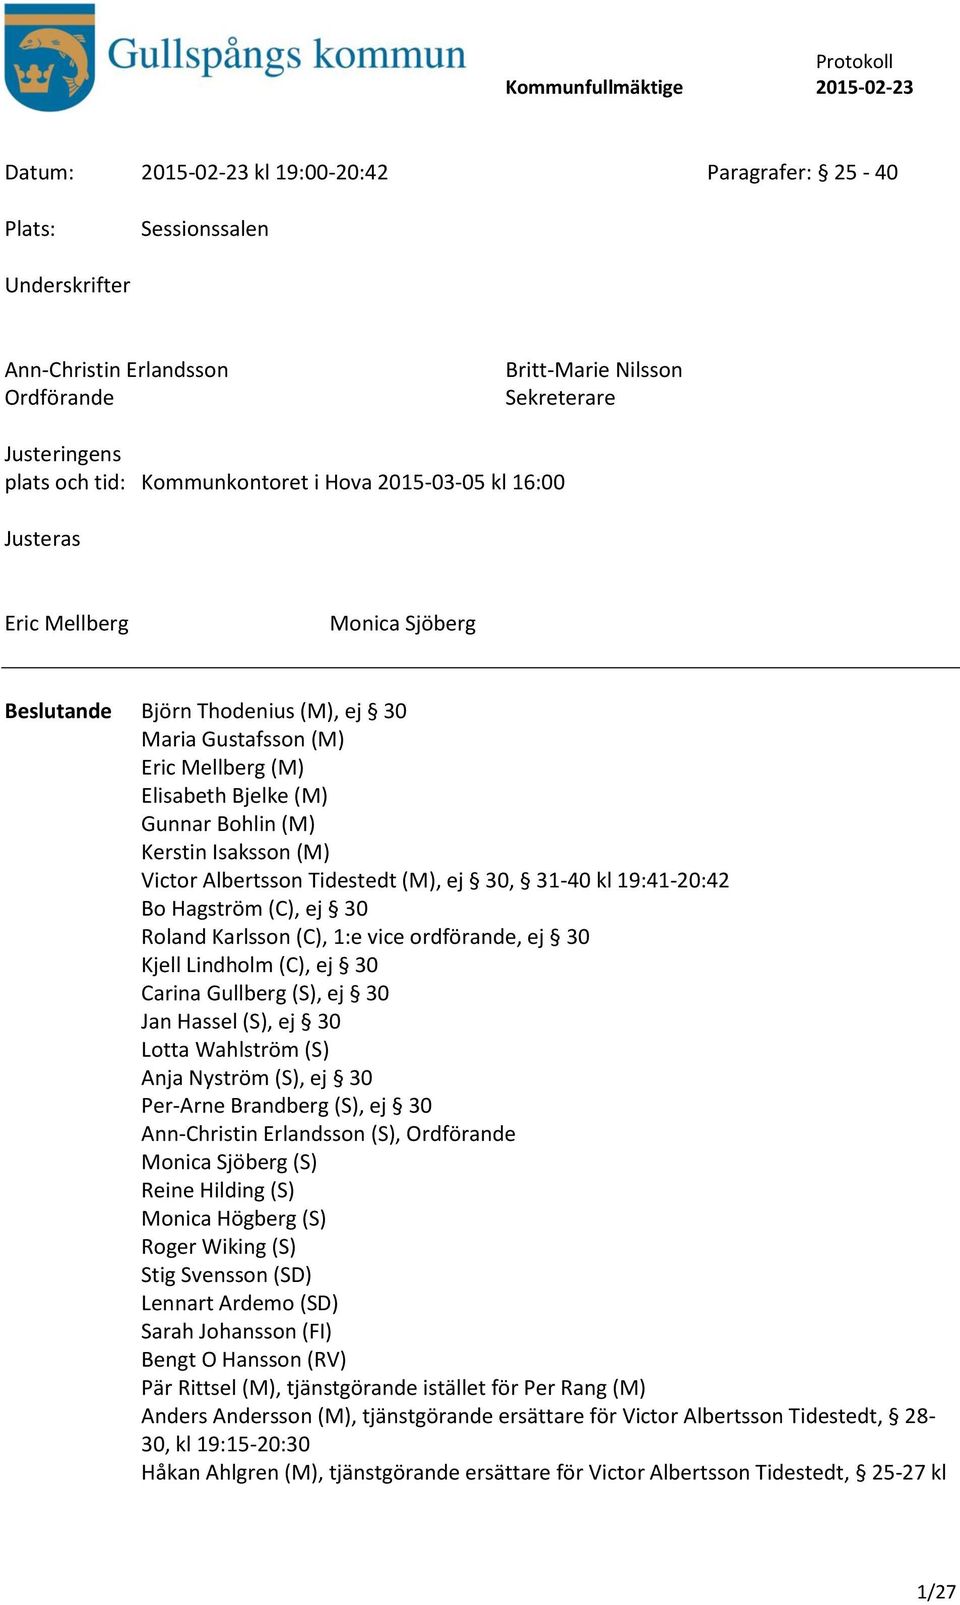 Albertsson Tidestedt (M), ej 30, 31-40 kl 19:41-20:42 Bo Hagström (C), ej 30 Roland Karlsson (C), 1:e vice ordförande, ej 30 Kjell Lindholm (C), ej 30 Carina Gullberg (S), ej 30 Jan Hassel (S), ej 30